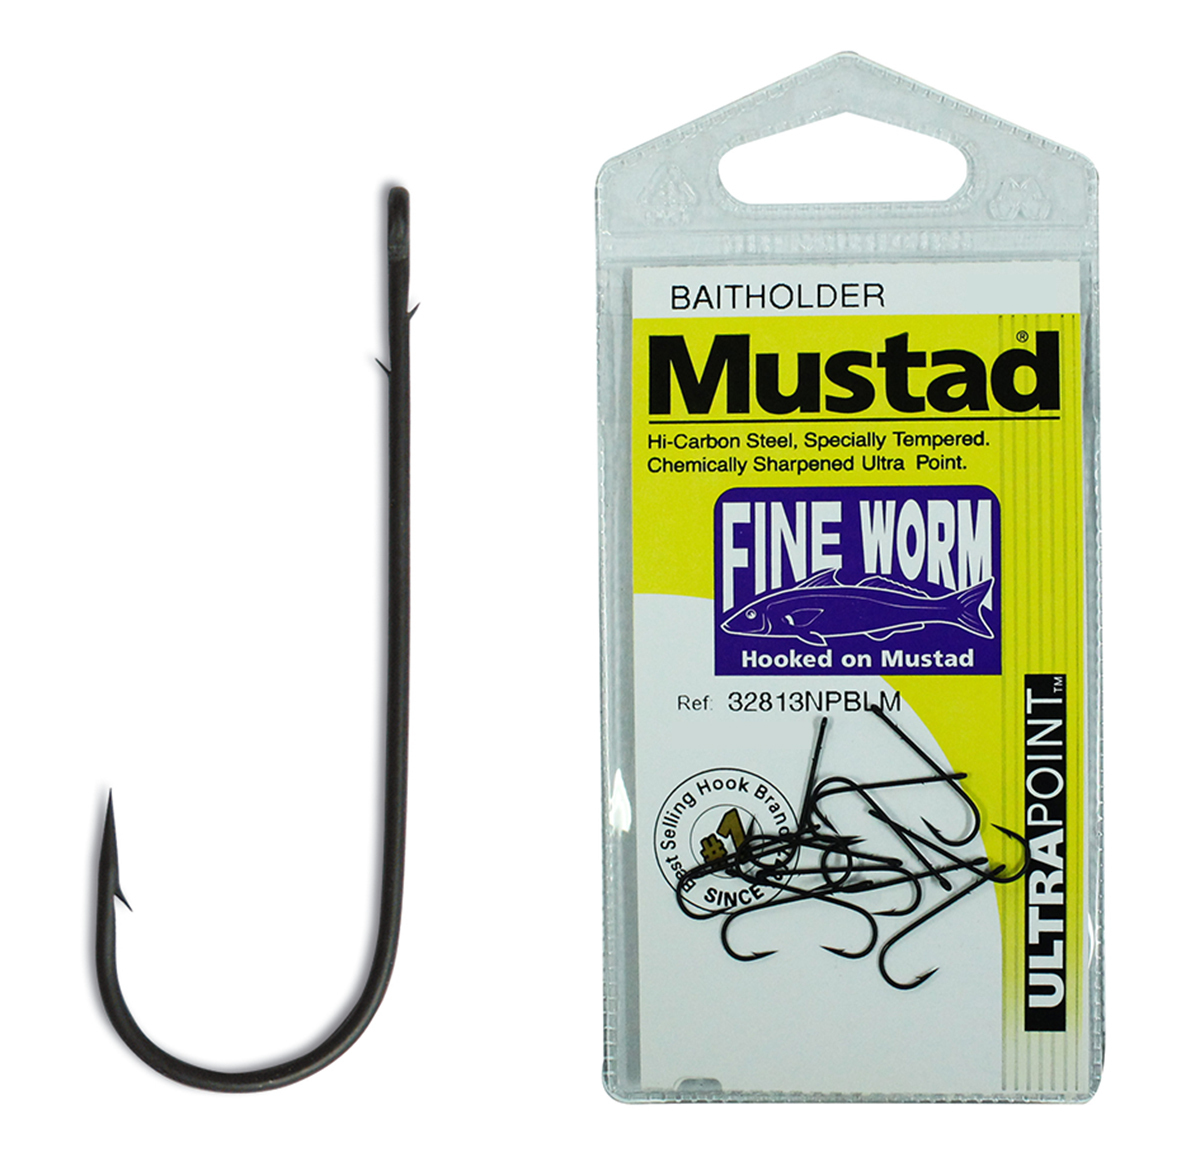 Mustad Fine Worm Size 10 Qty 13 32813npblm Chemically